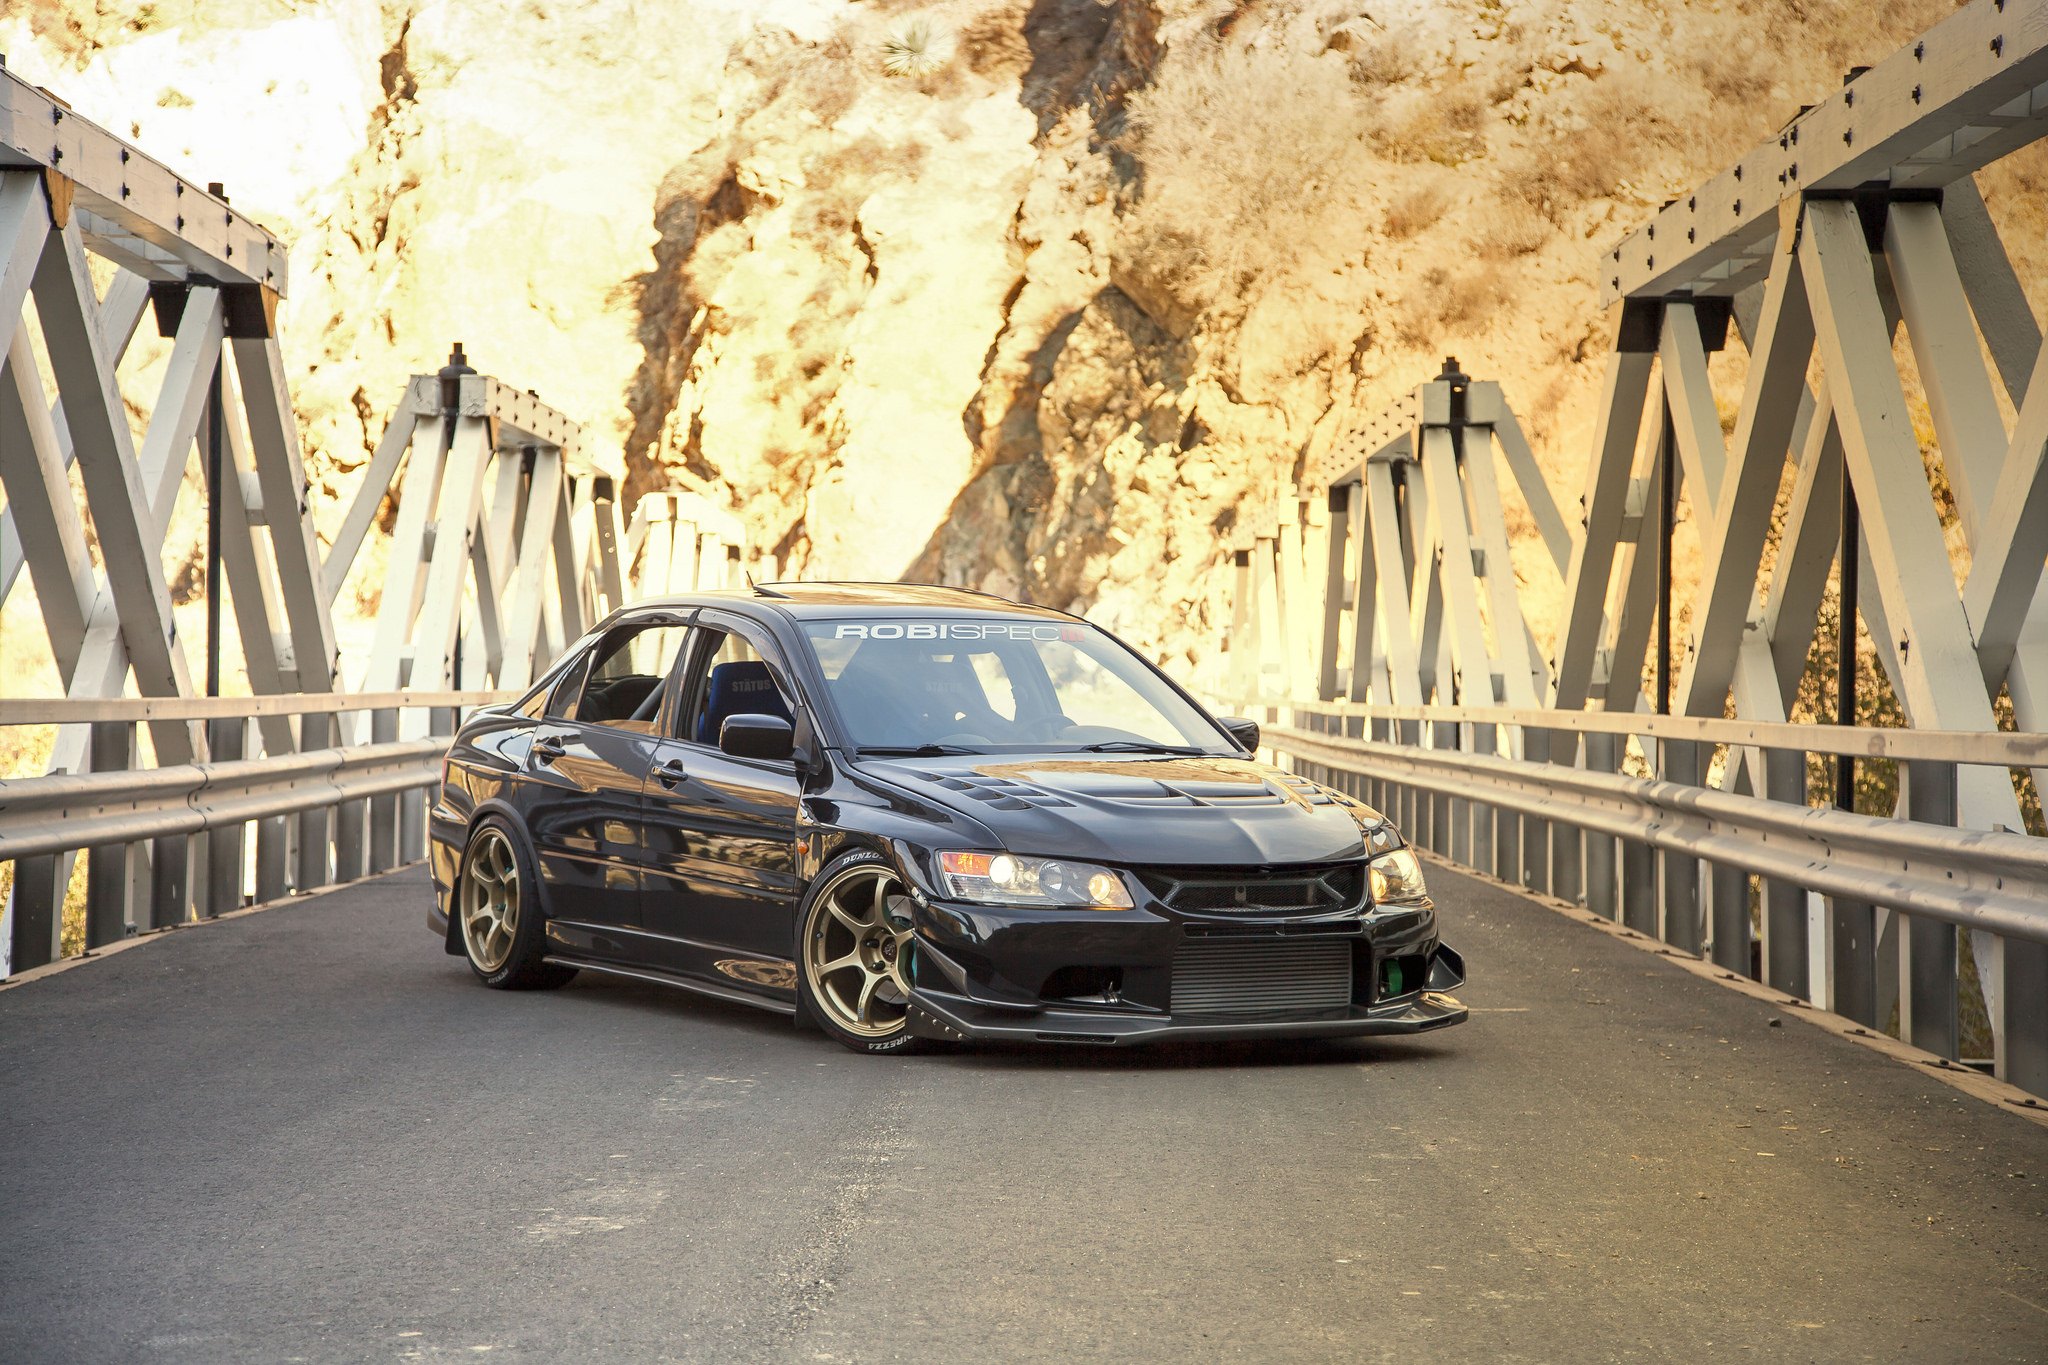 Custom Front Lip on Black Mitsubishi Evolution - Photo by Manuel Veron